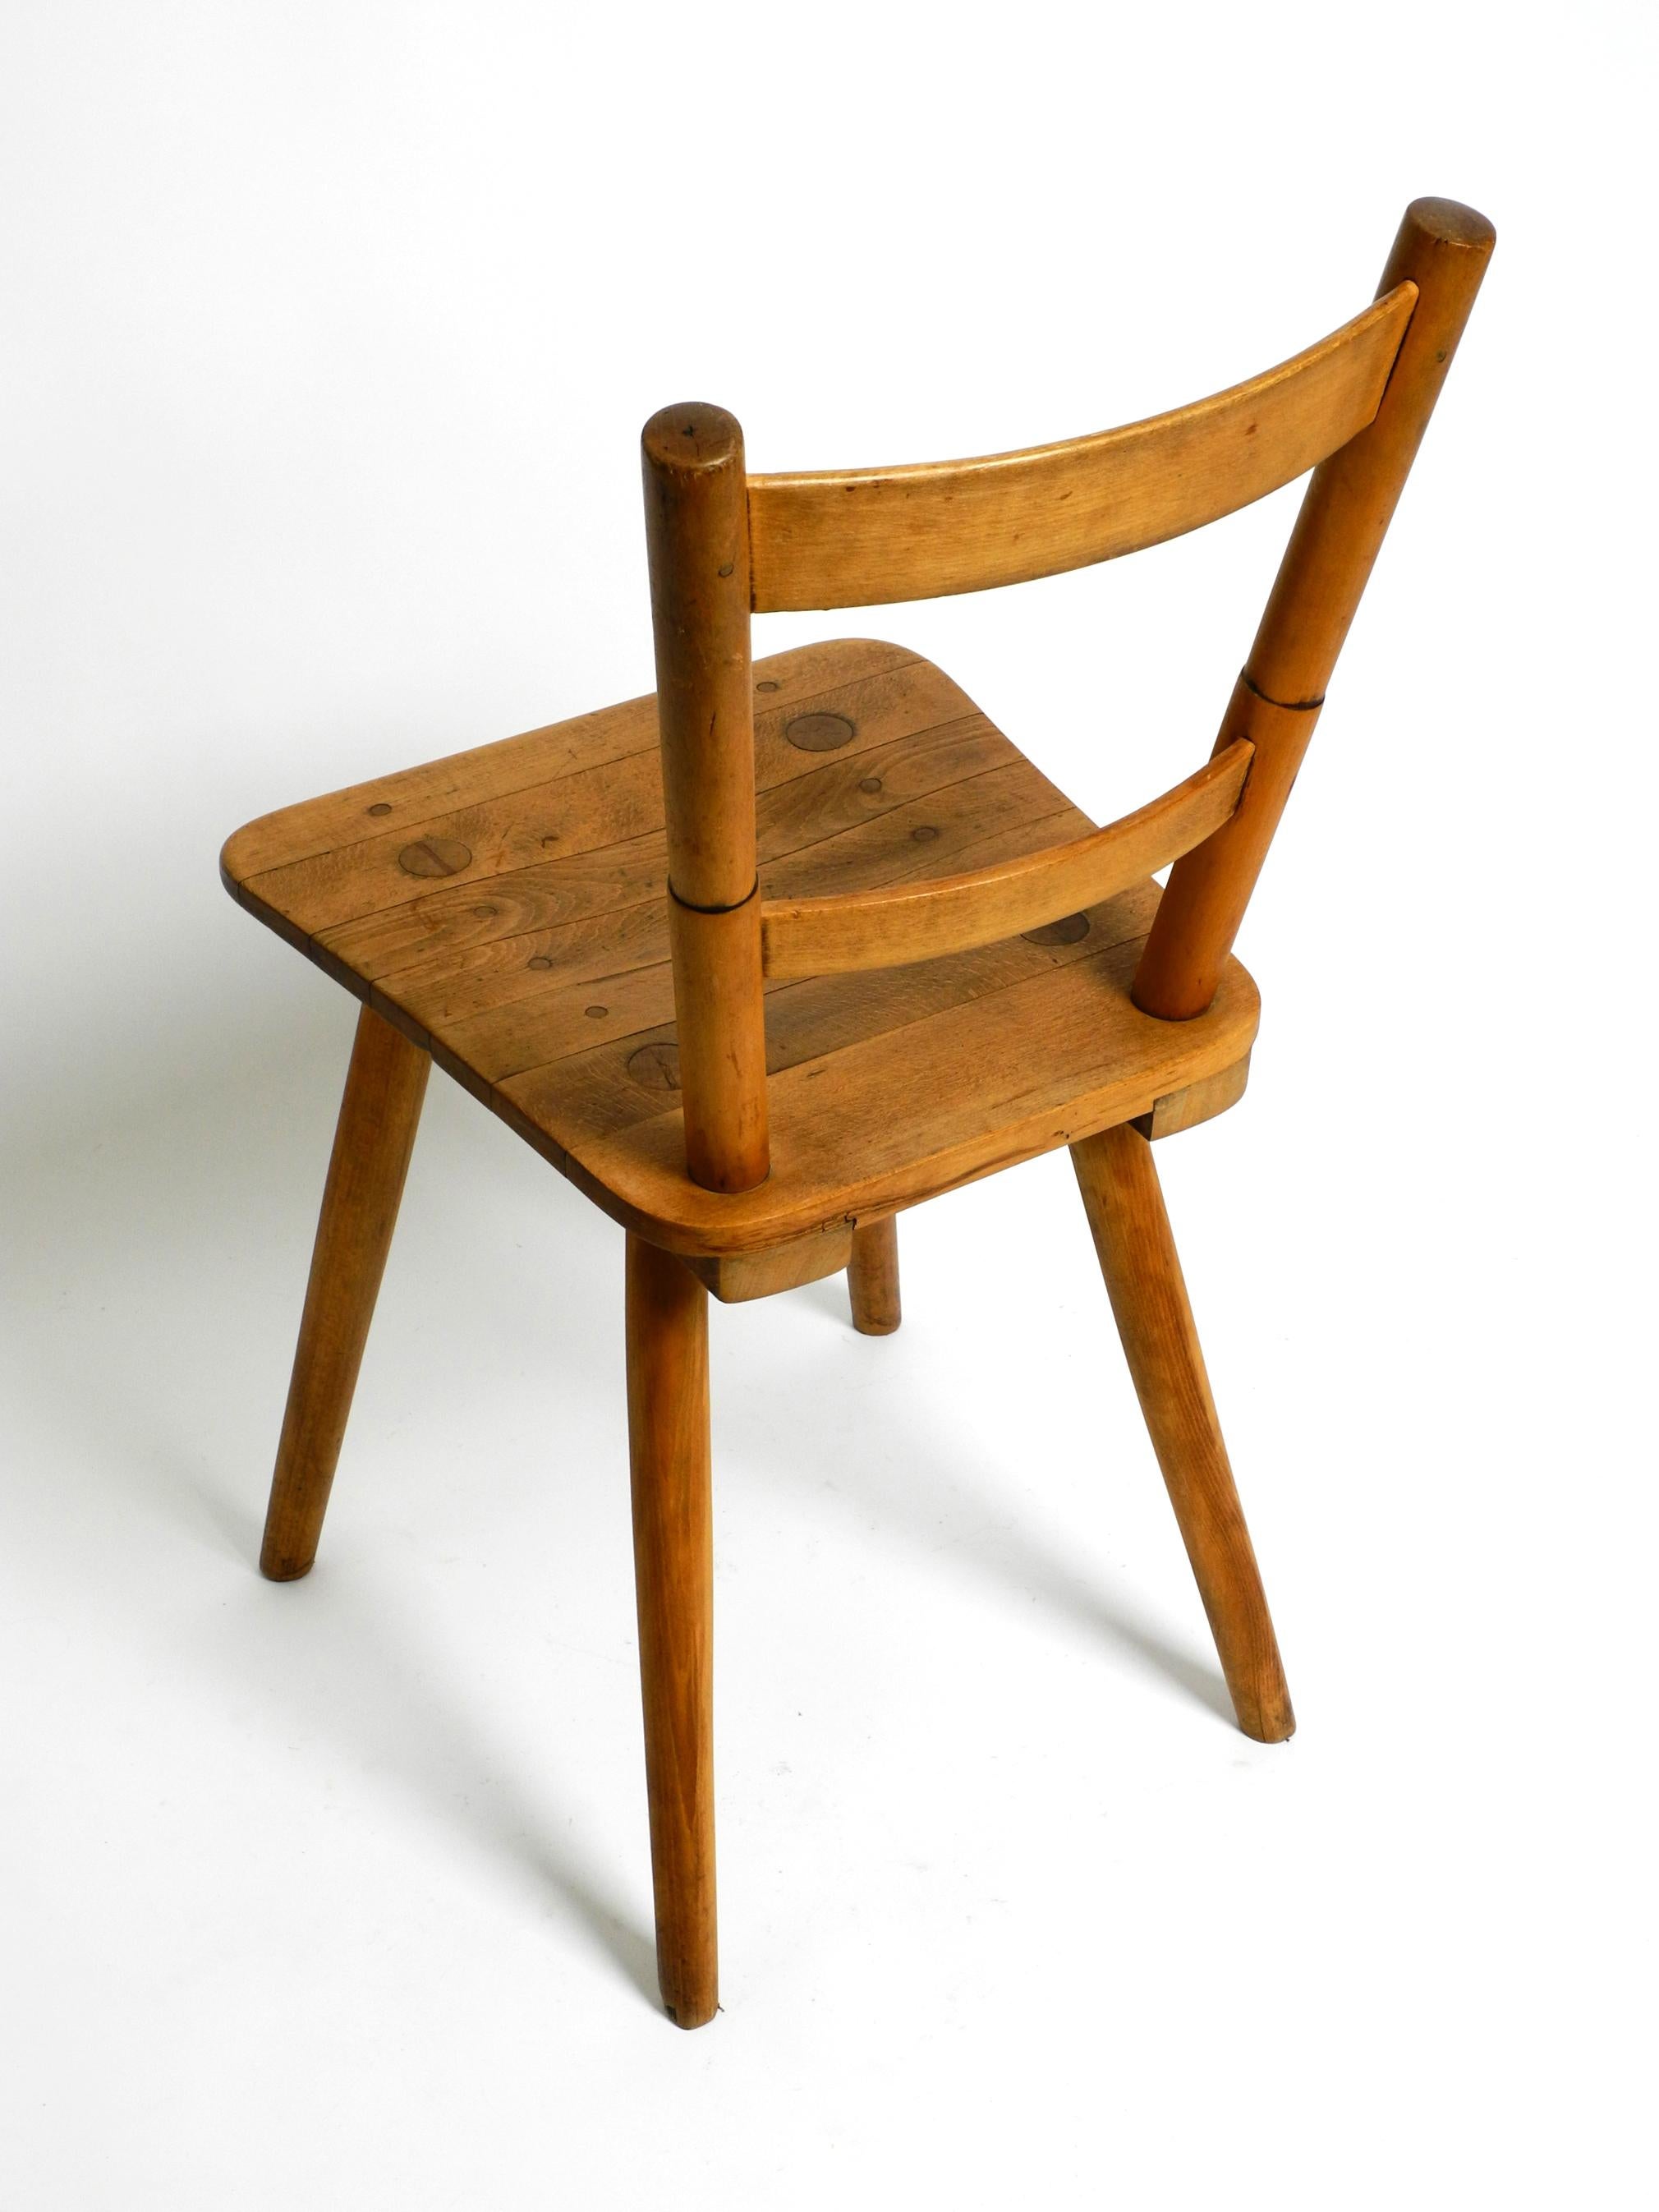 1930s Tübinger chair by the architect Prof. Adolf Gustav Schneck for Schäfer  For Sale 11